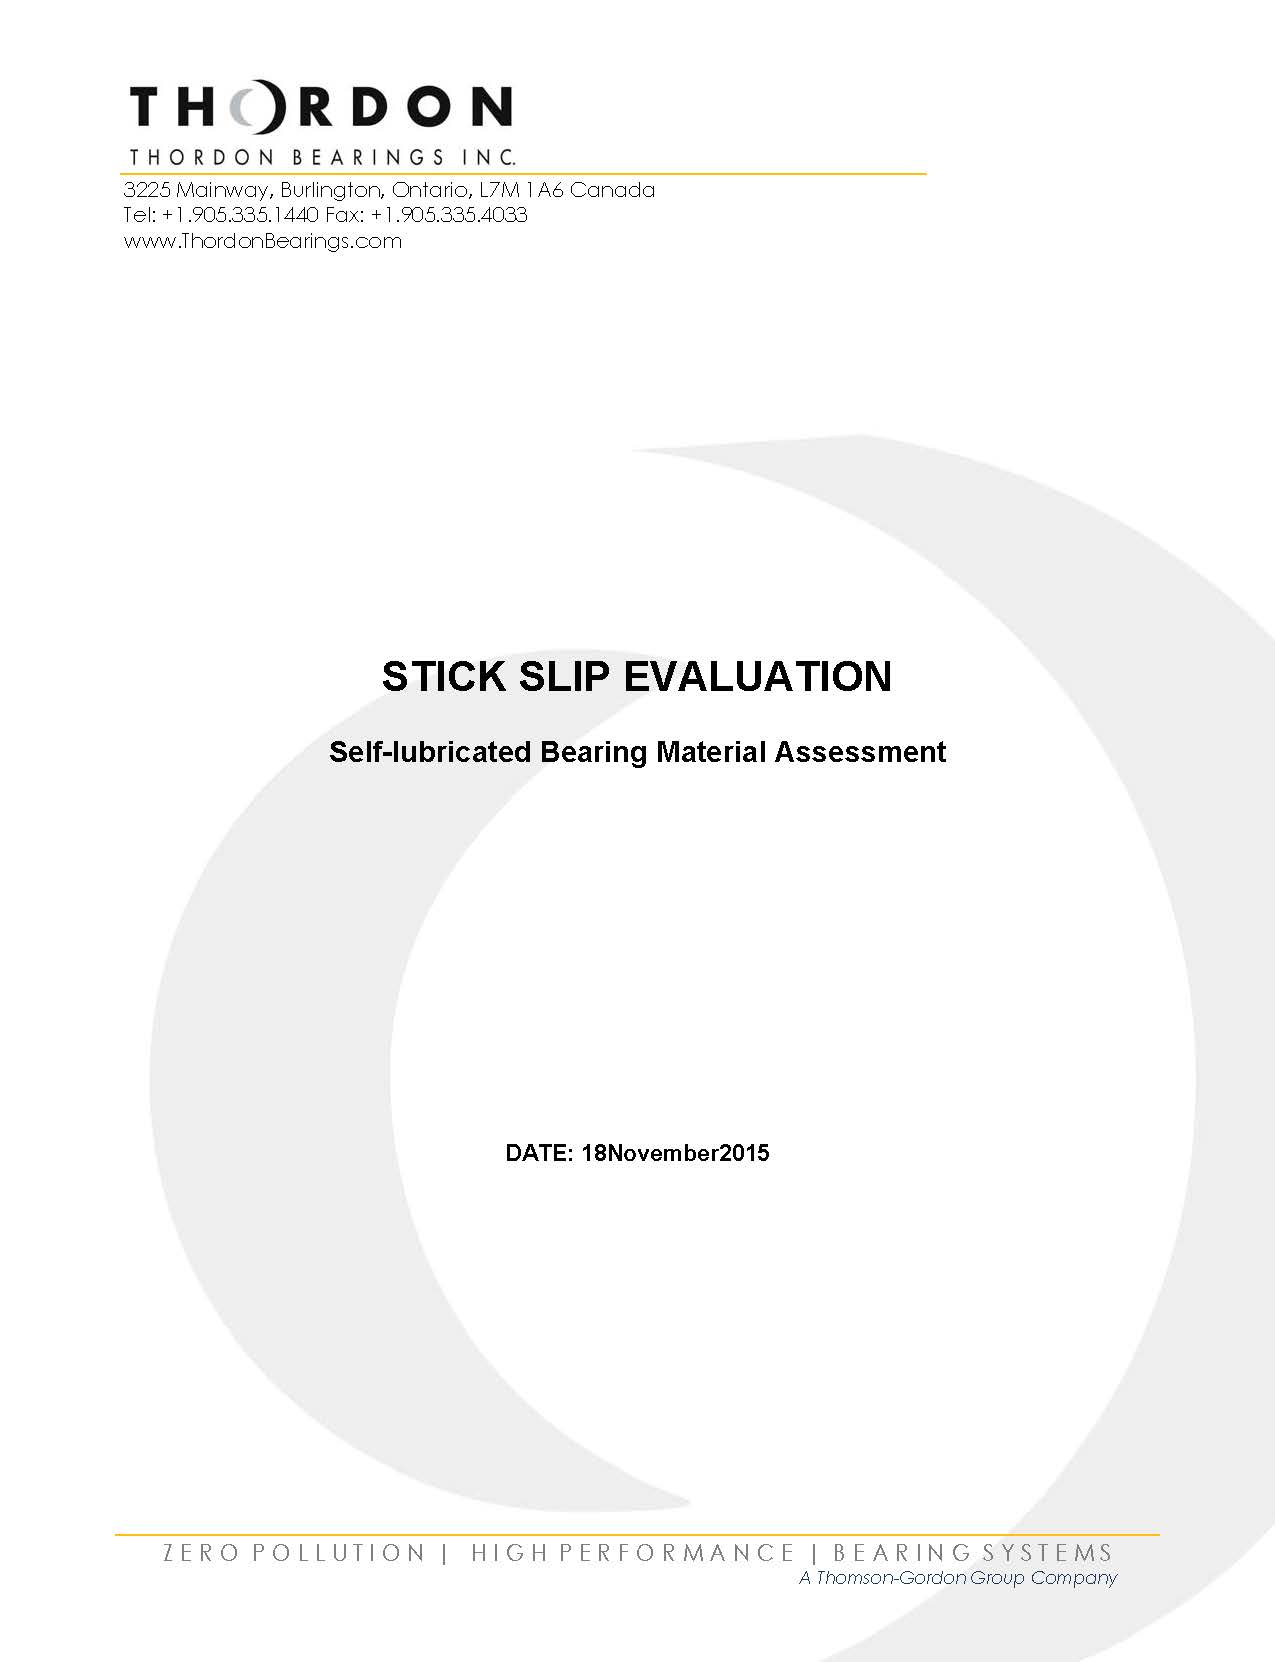 Stick Slip Evaluation of ThorPlas